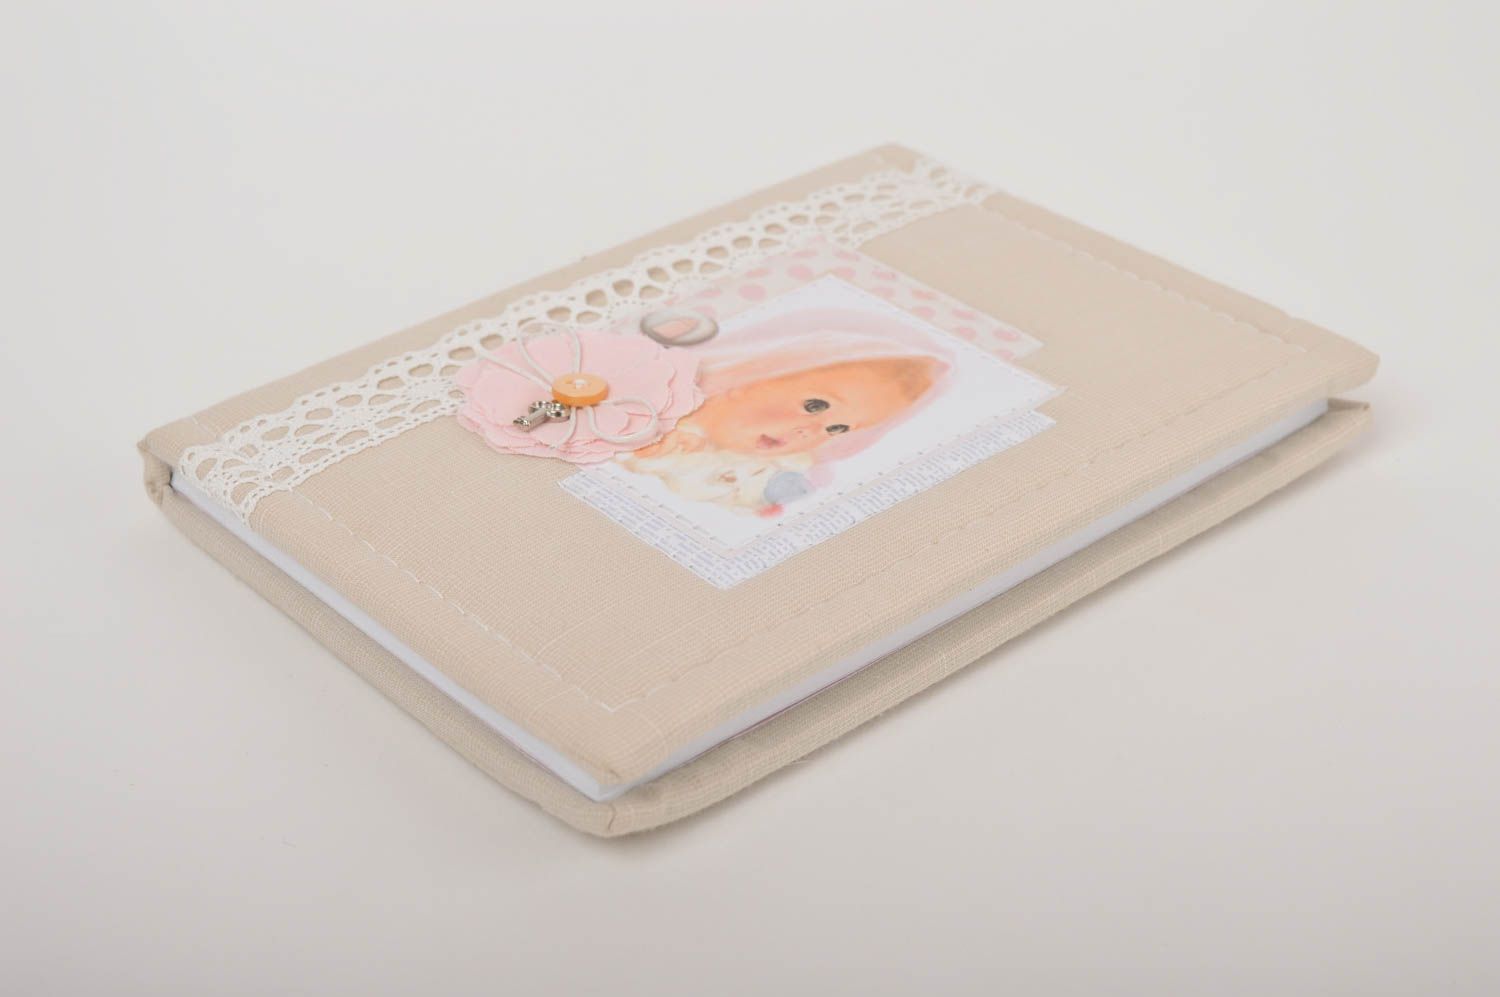 Handmade notebook designer notebook gift ideas unusual gift for girls photo 2